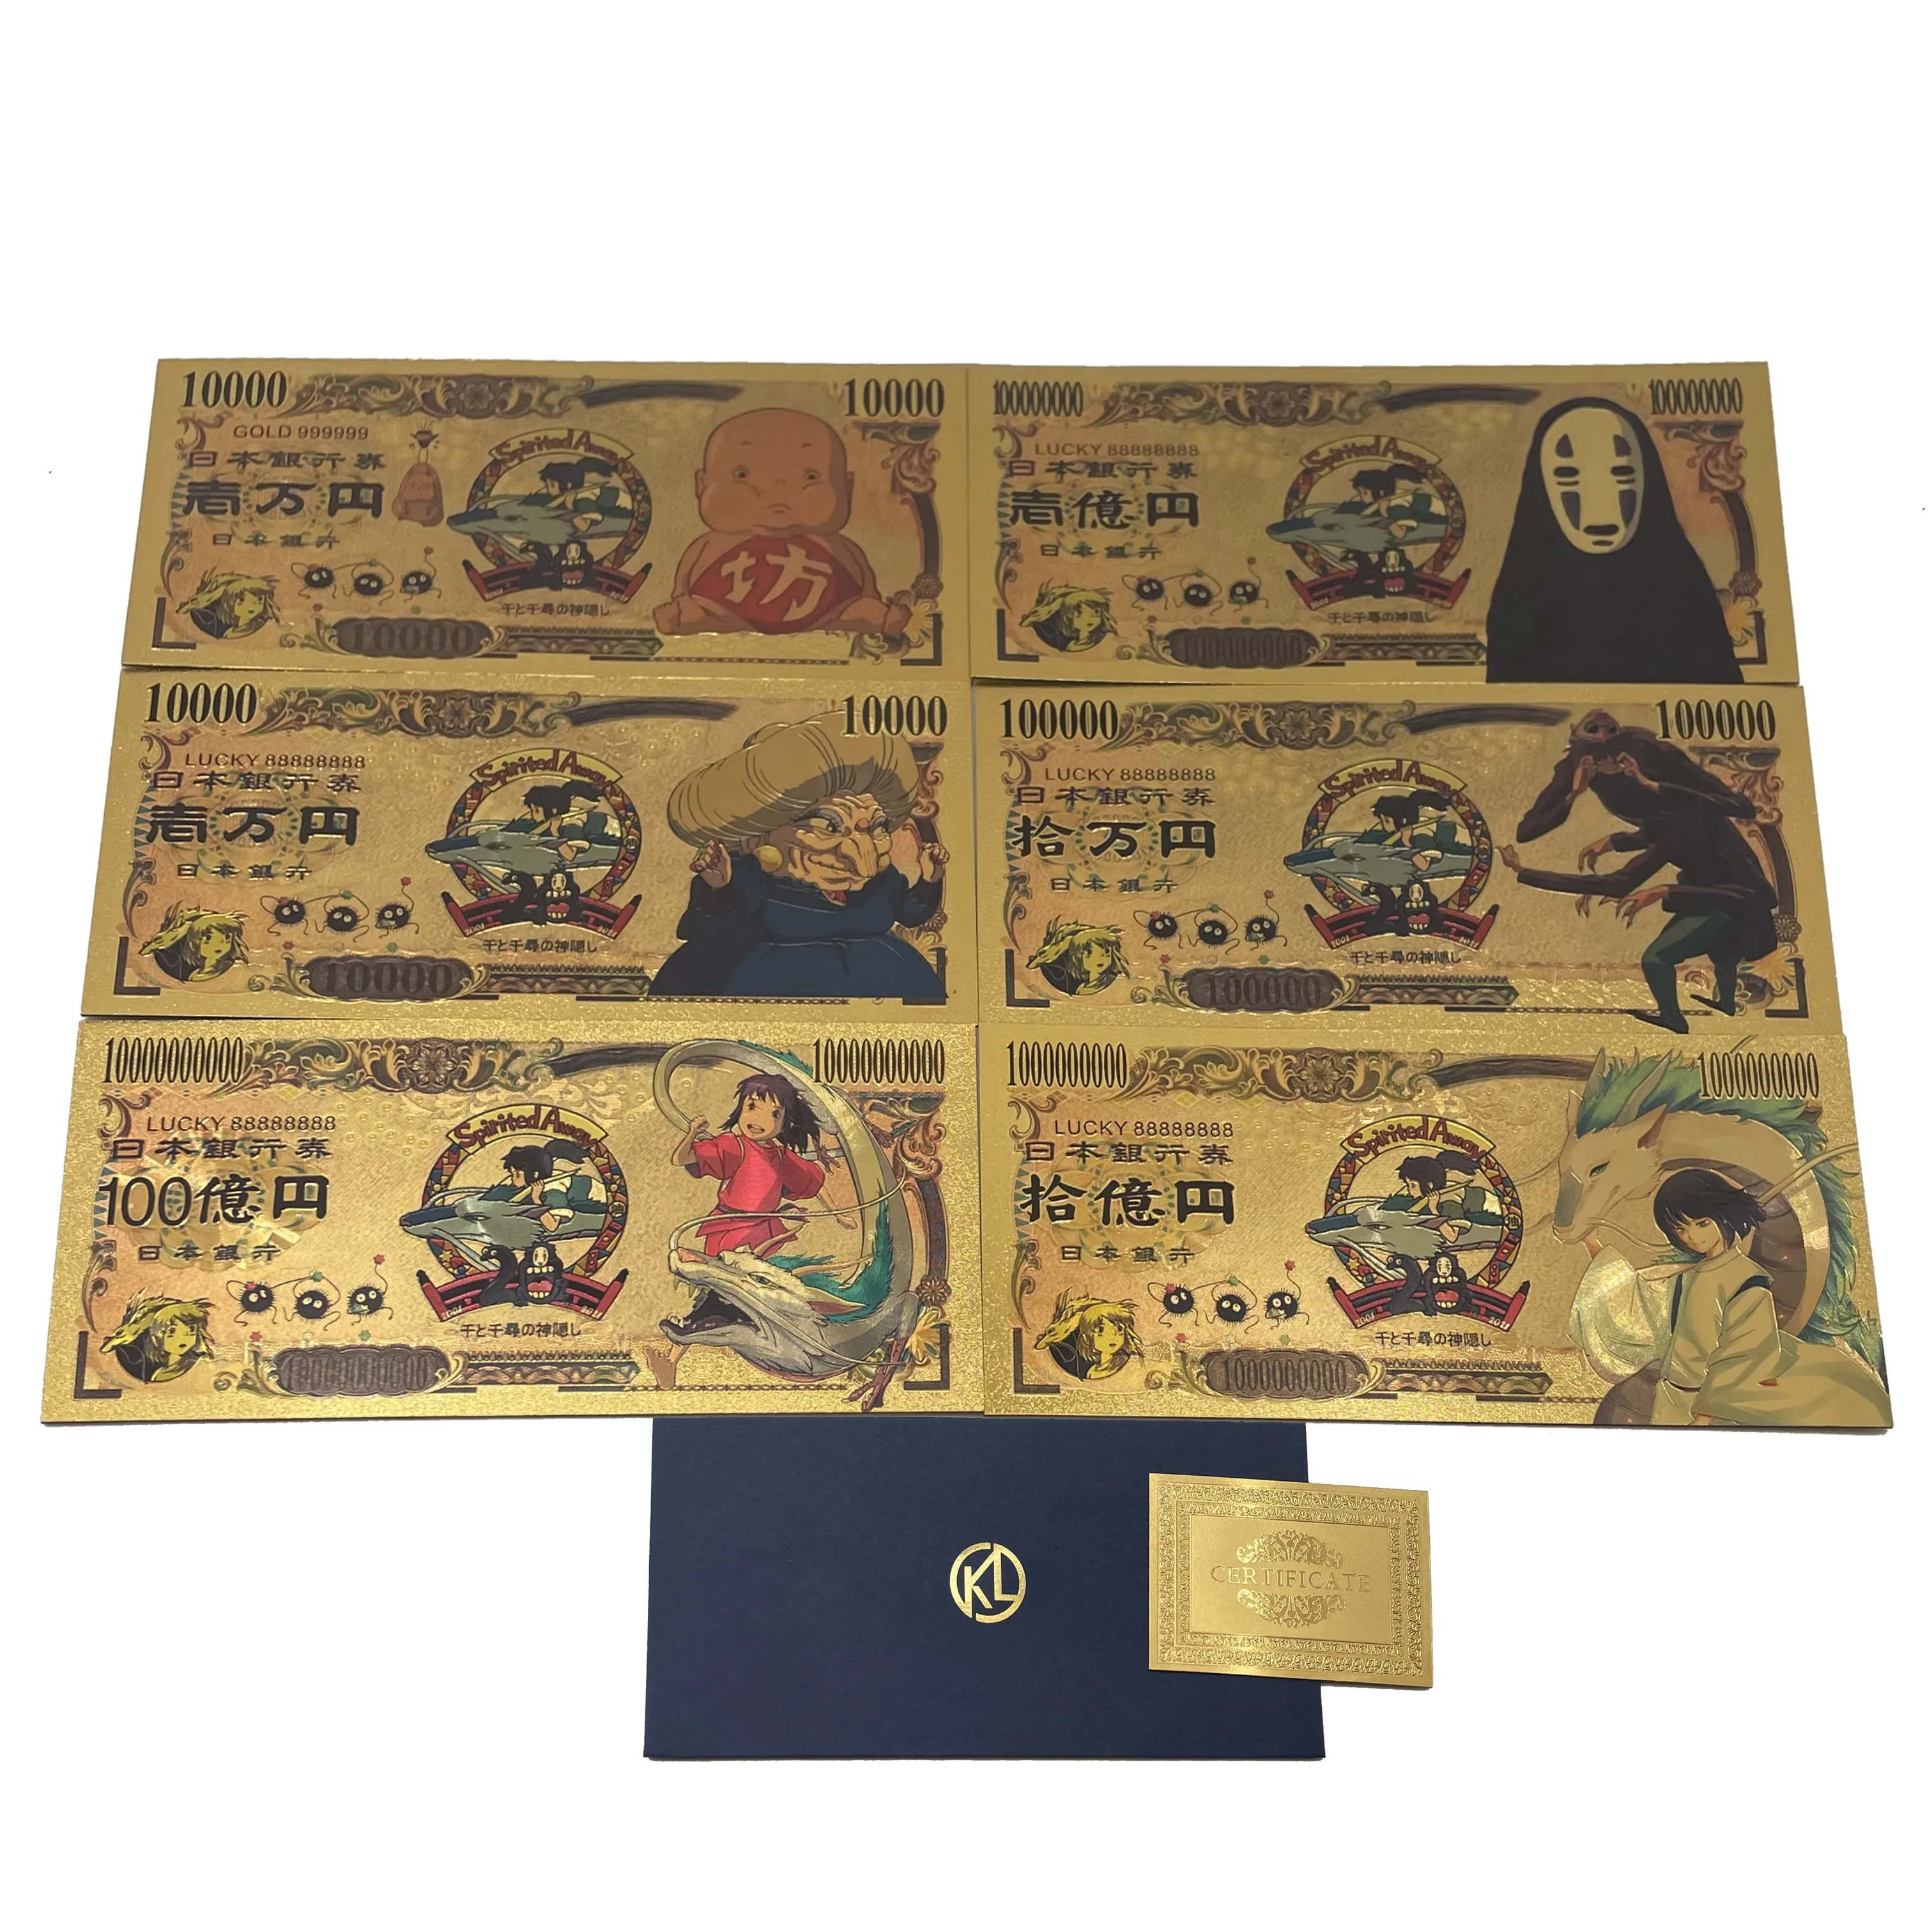 

11 types Japanese Anime Spirited Away playing cards Classic Manga no face man yubaba Gold foil notes 10000 Yen gifts